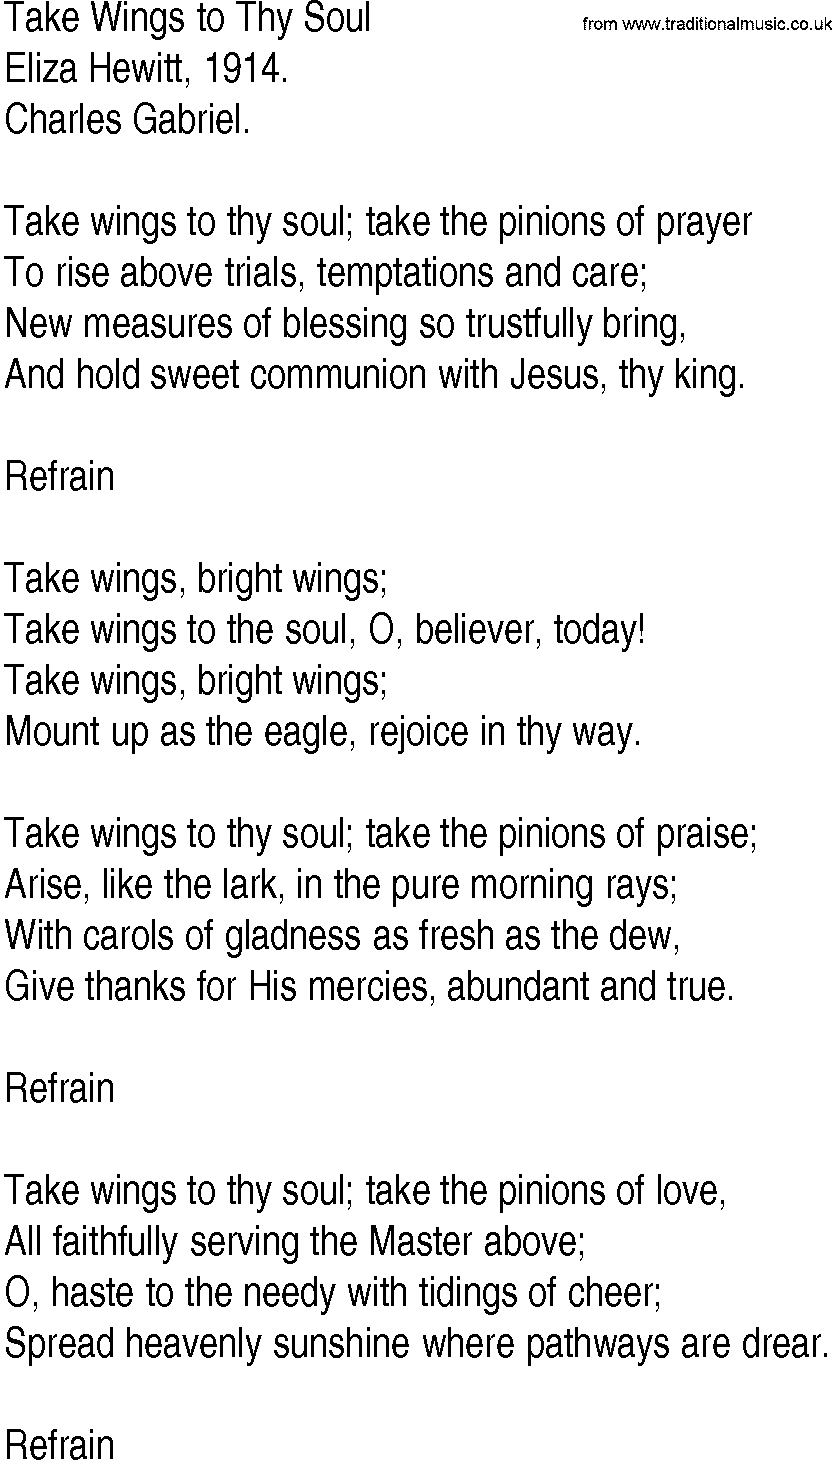 Hymn and Gospel Song: Take Wings to Thy Soul by Eliza Hewitt lyrics